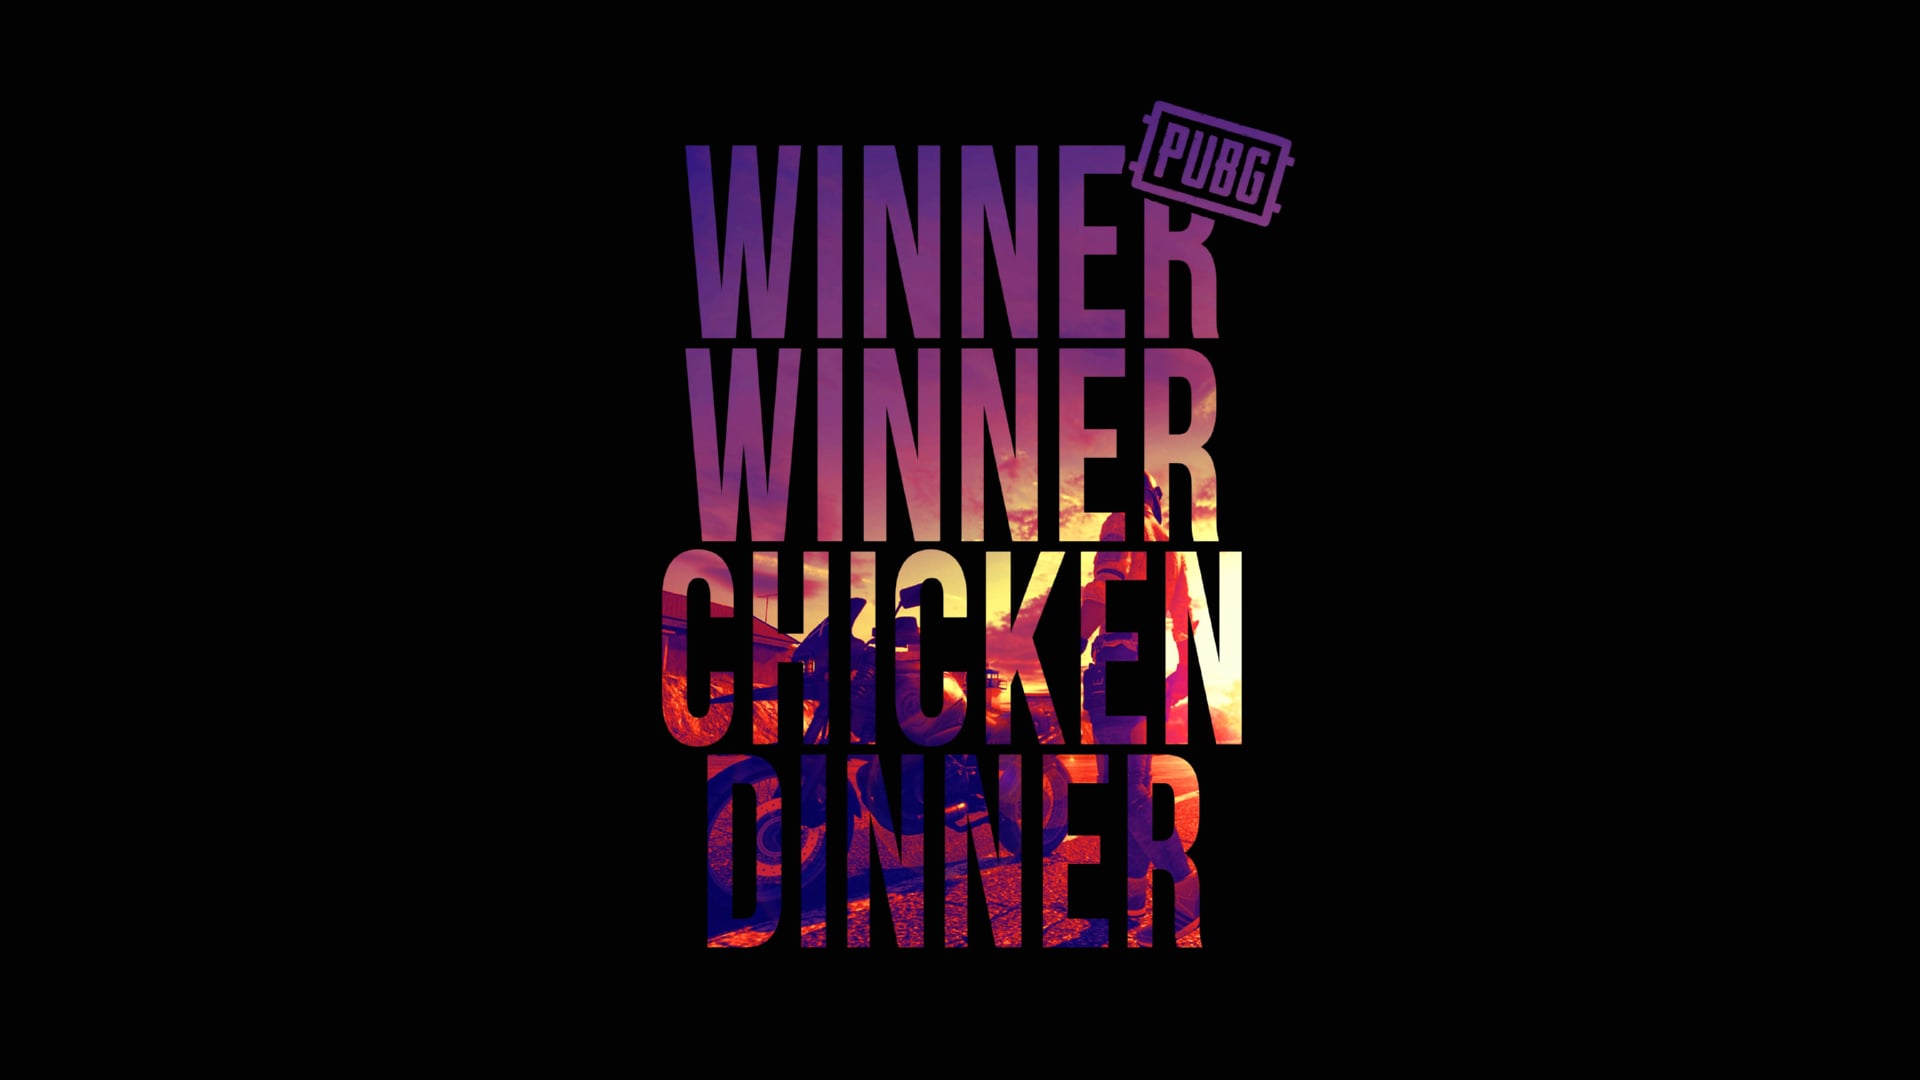 Winner Winner Chicken Dinner at 2048 x 2048 iPad size wallpapers HD quality